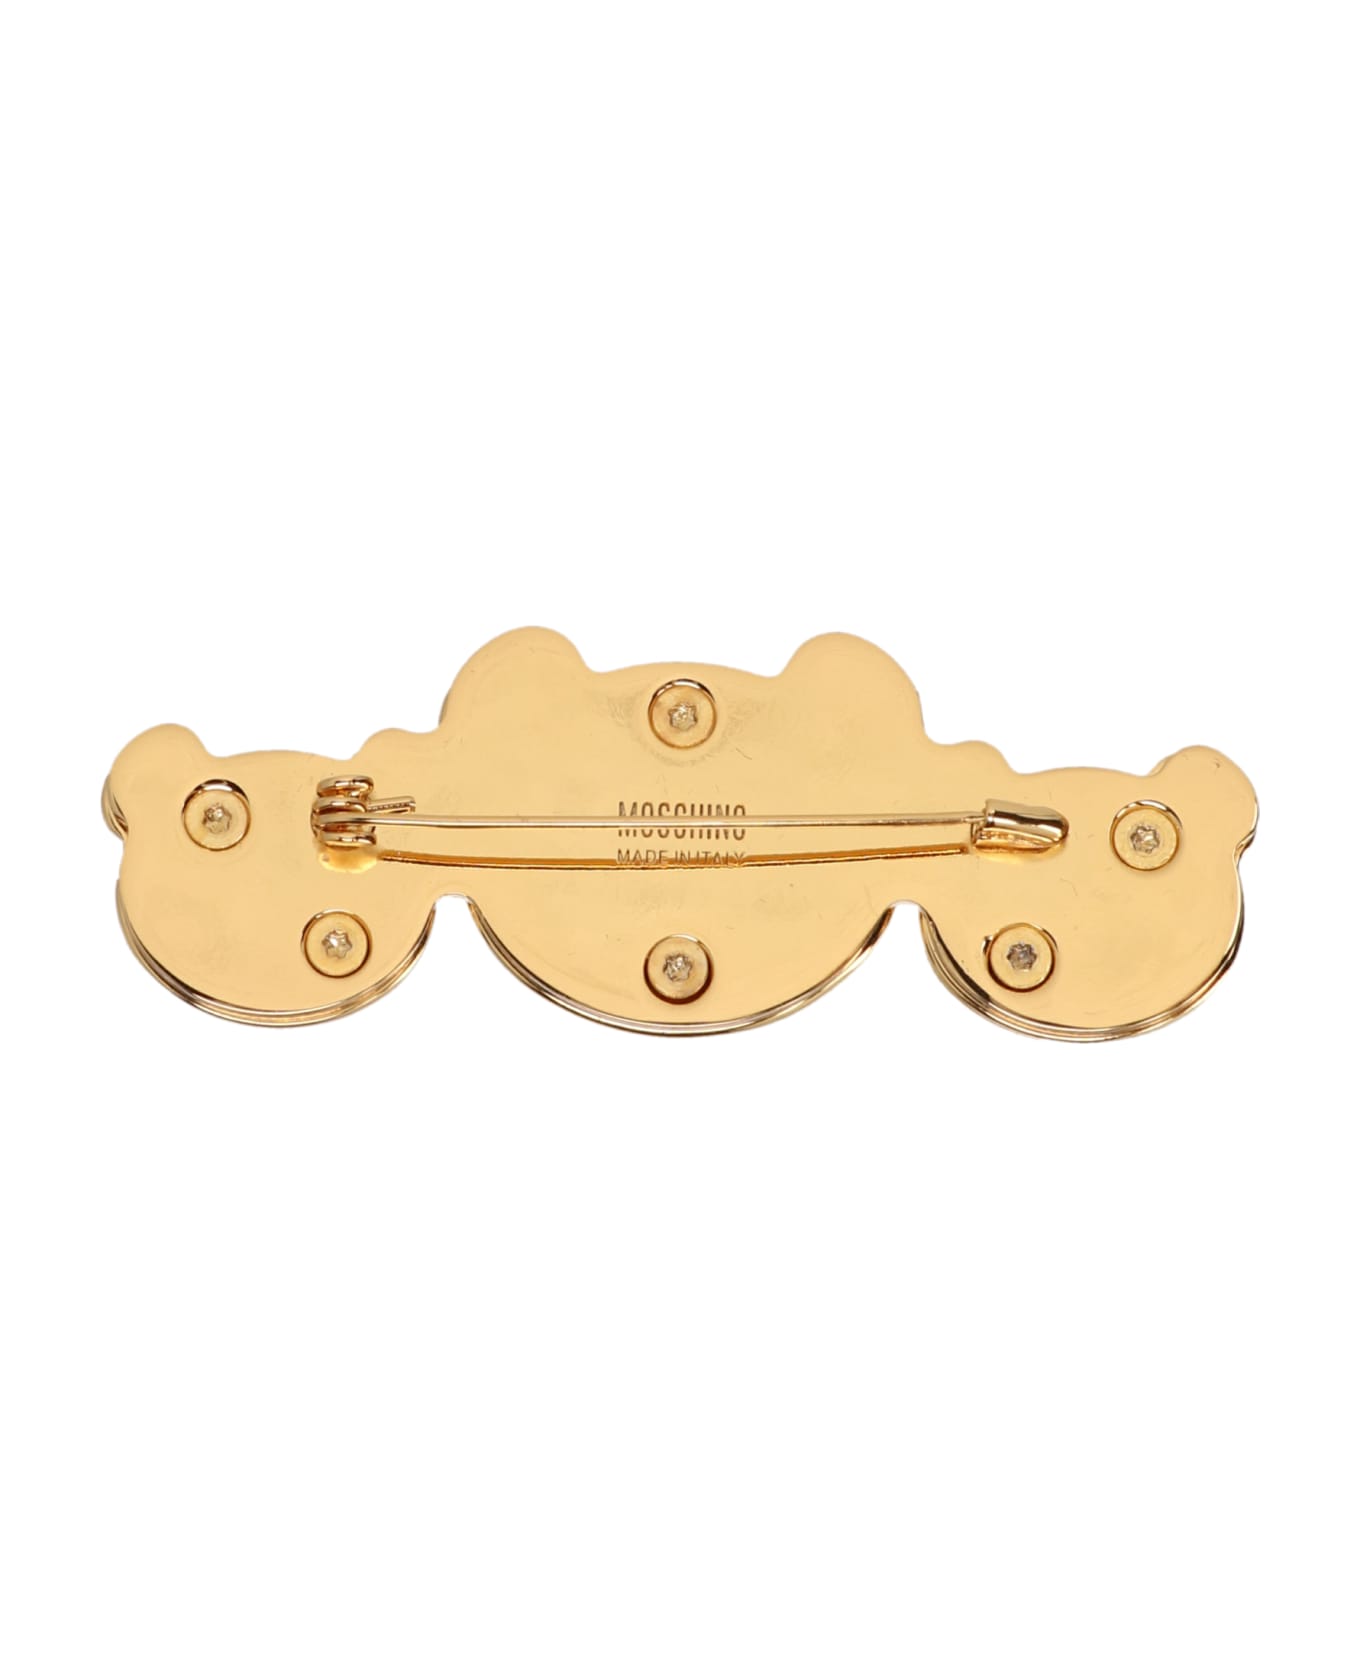 Moschino 'teddy Bear' Pin - Gold